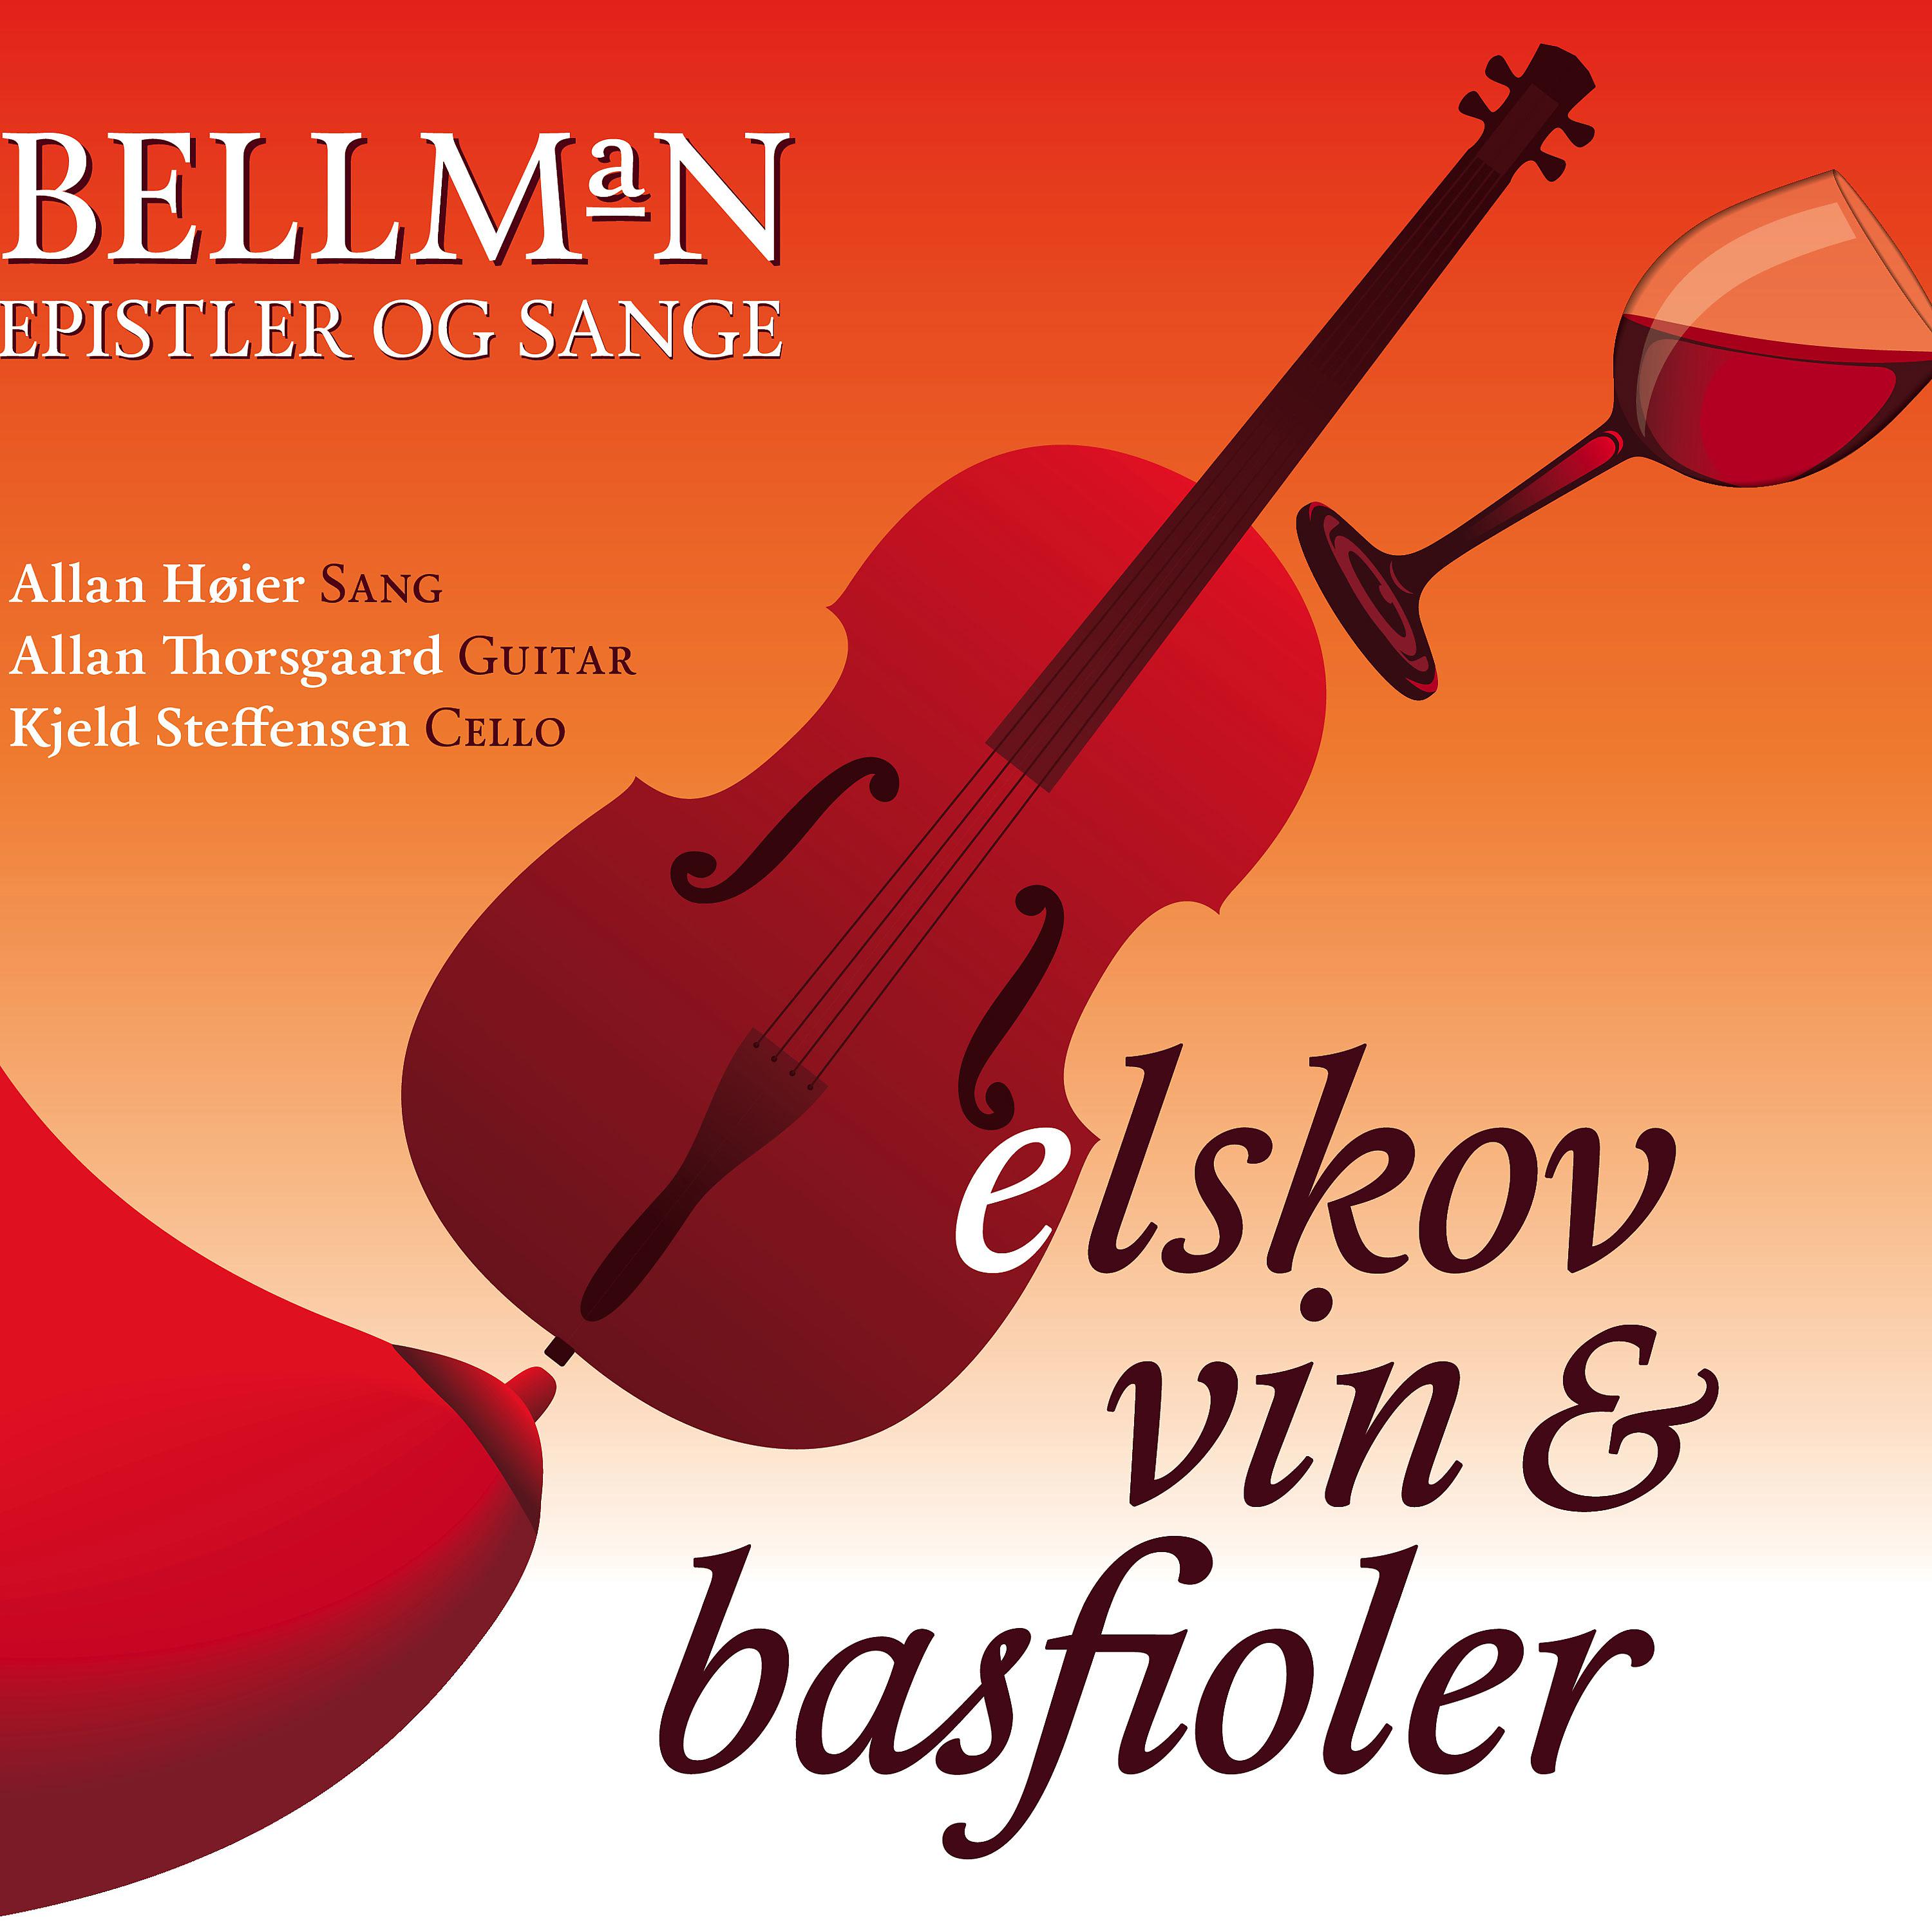 Постер альбома Bellman: Elskov, Vin & Basfioler